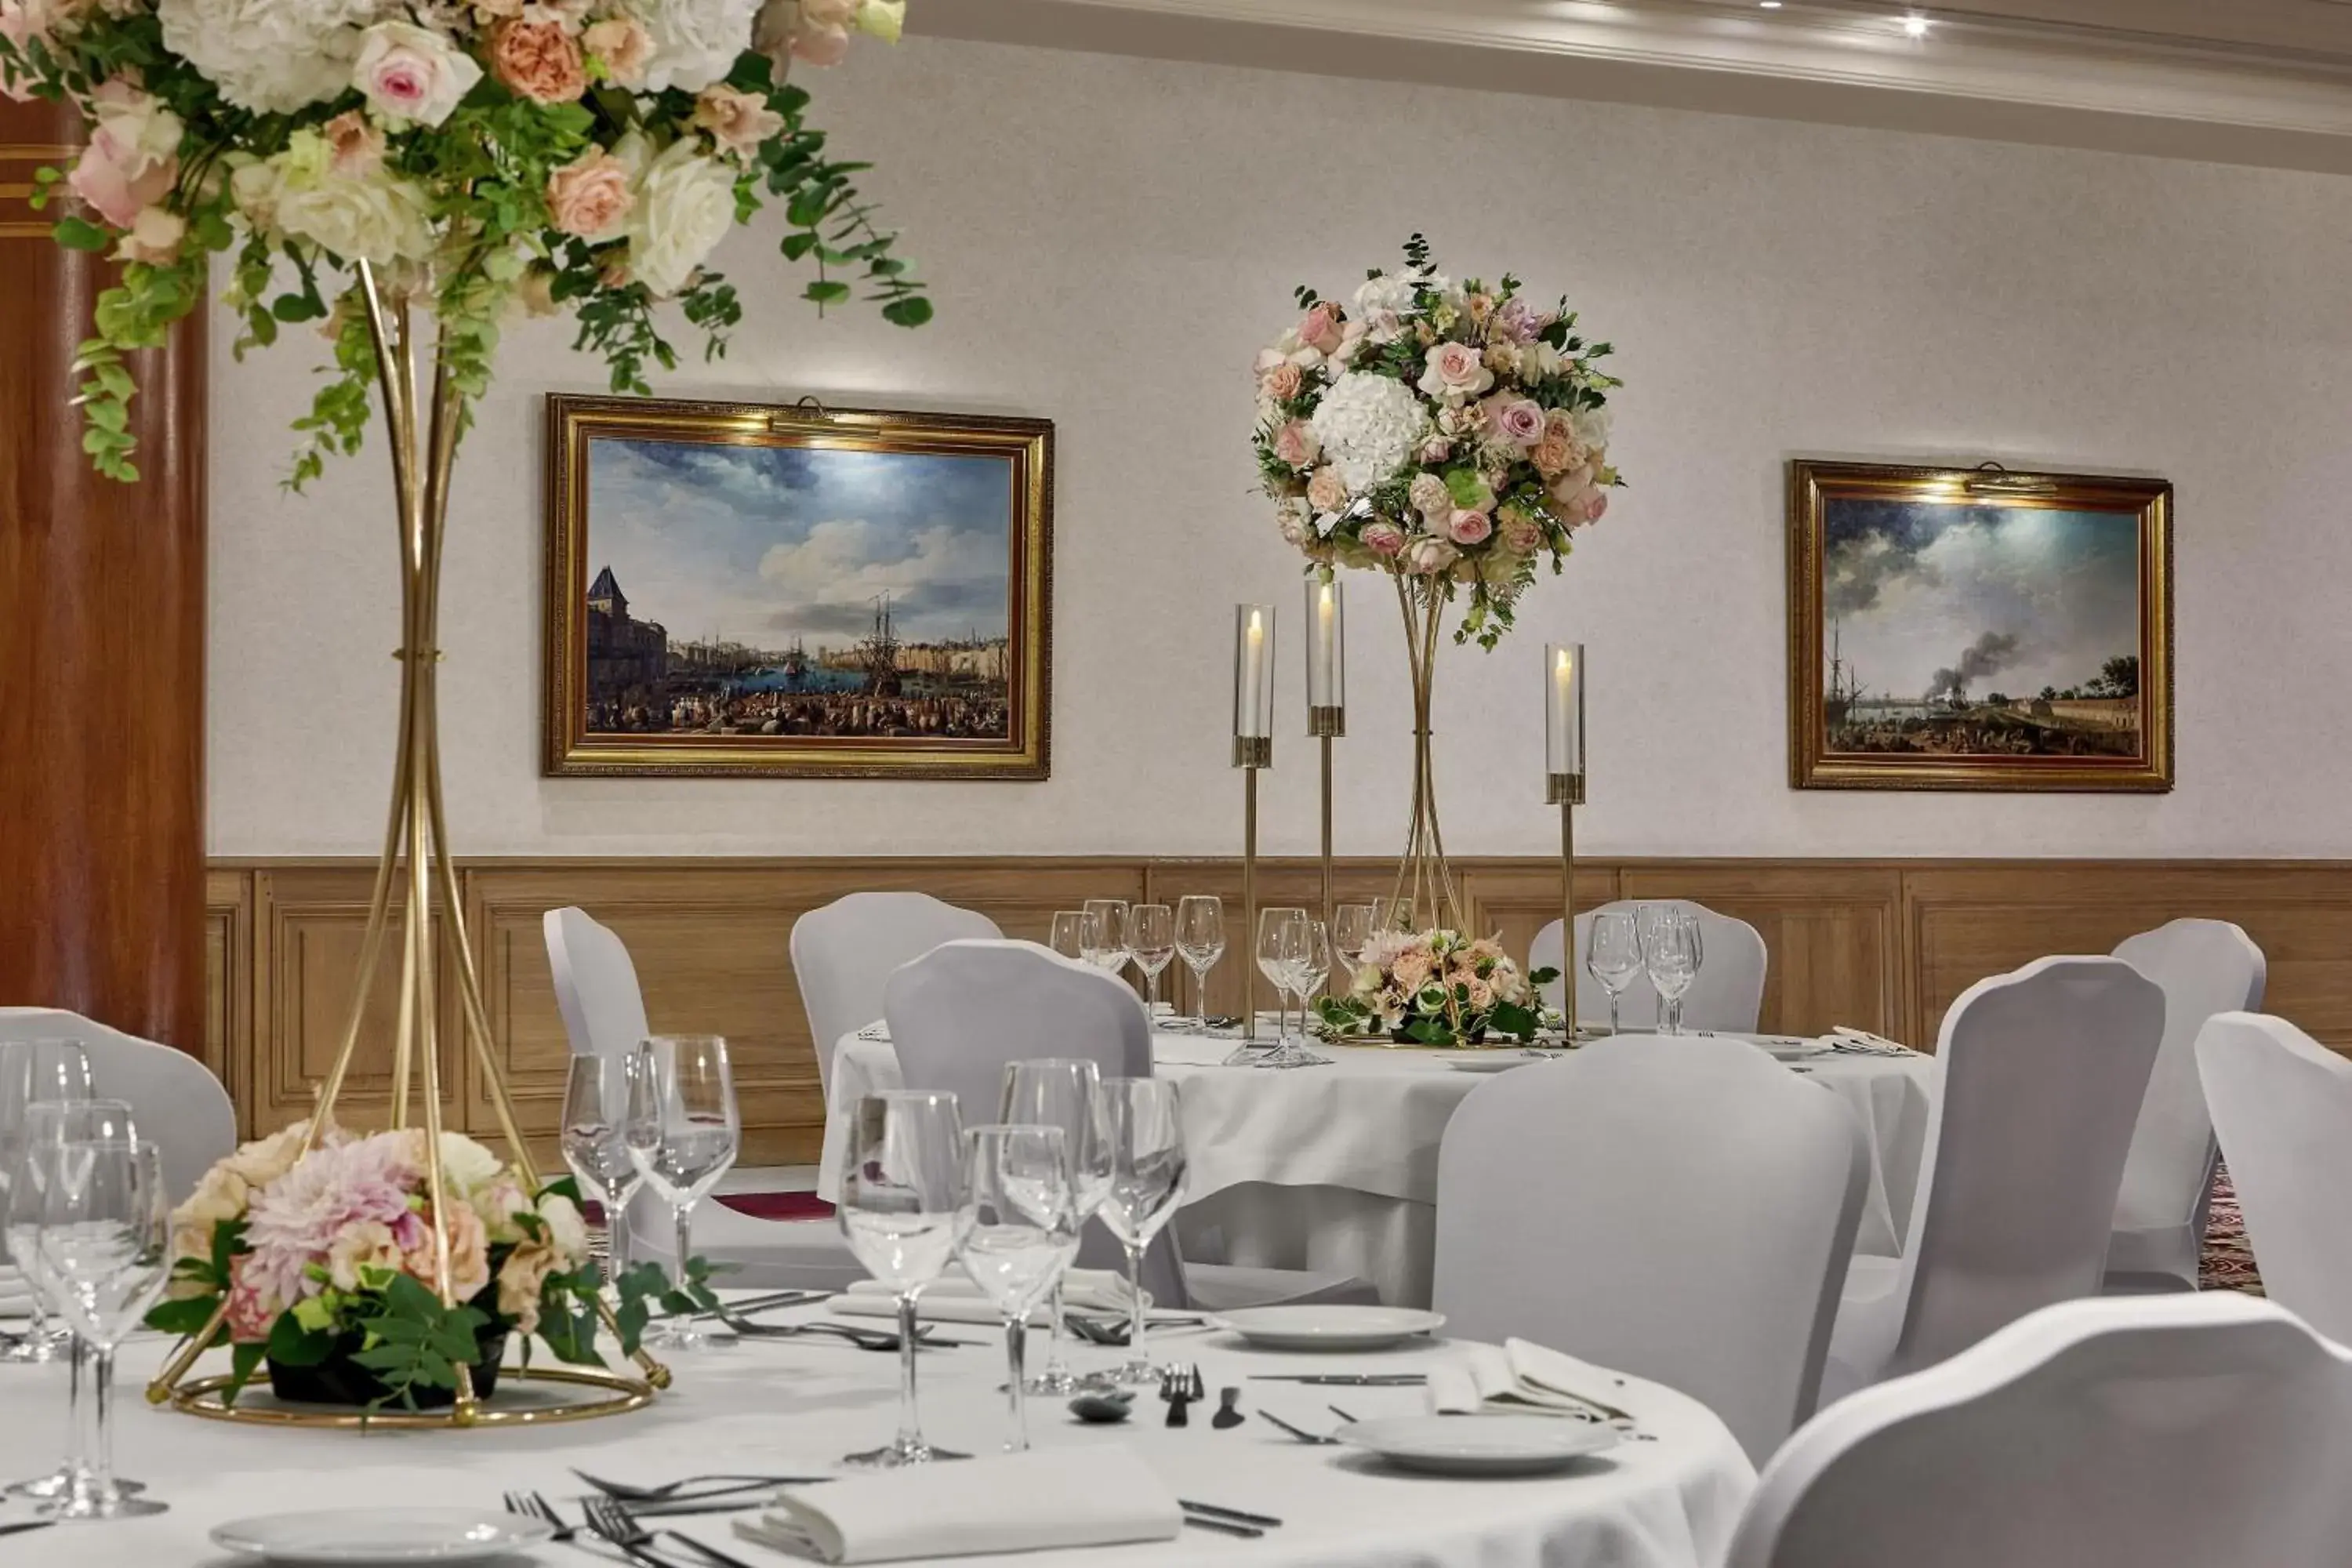 Banquet/Function facilities, Banquet Facilities in Paris Marriott Champs Elysees Hotel